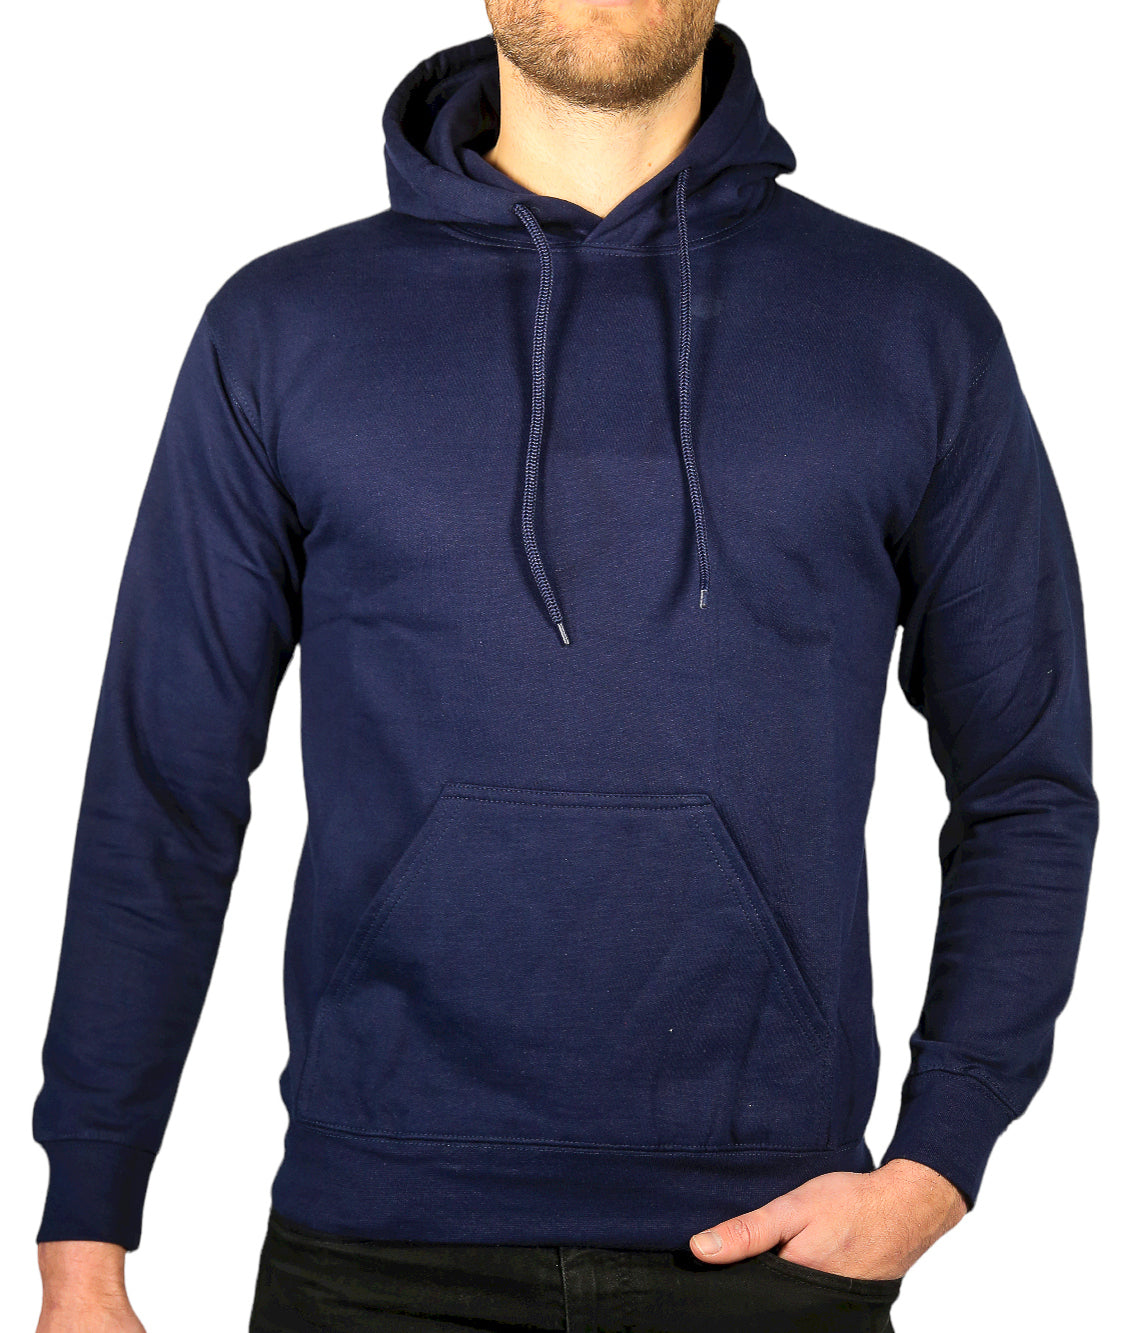 Adult Mens 100% Cotton Fleece Hoodie Jumper Pullover Sweater Warm Sweatshirt - Navy - M